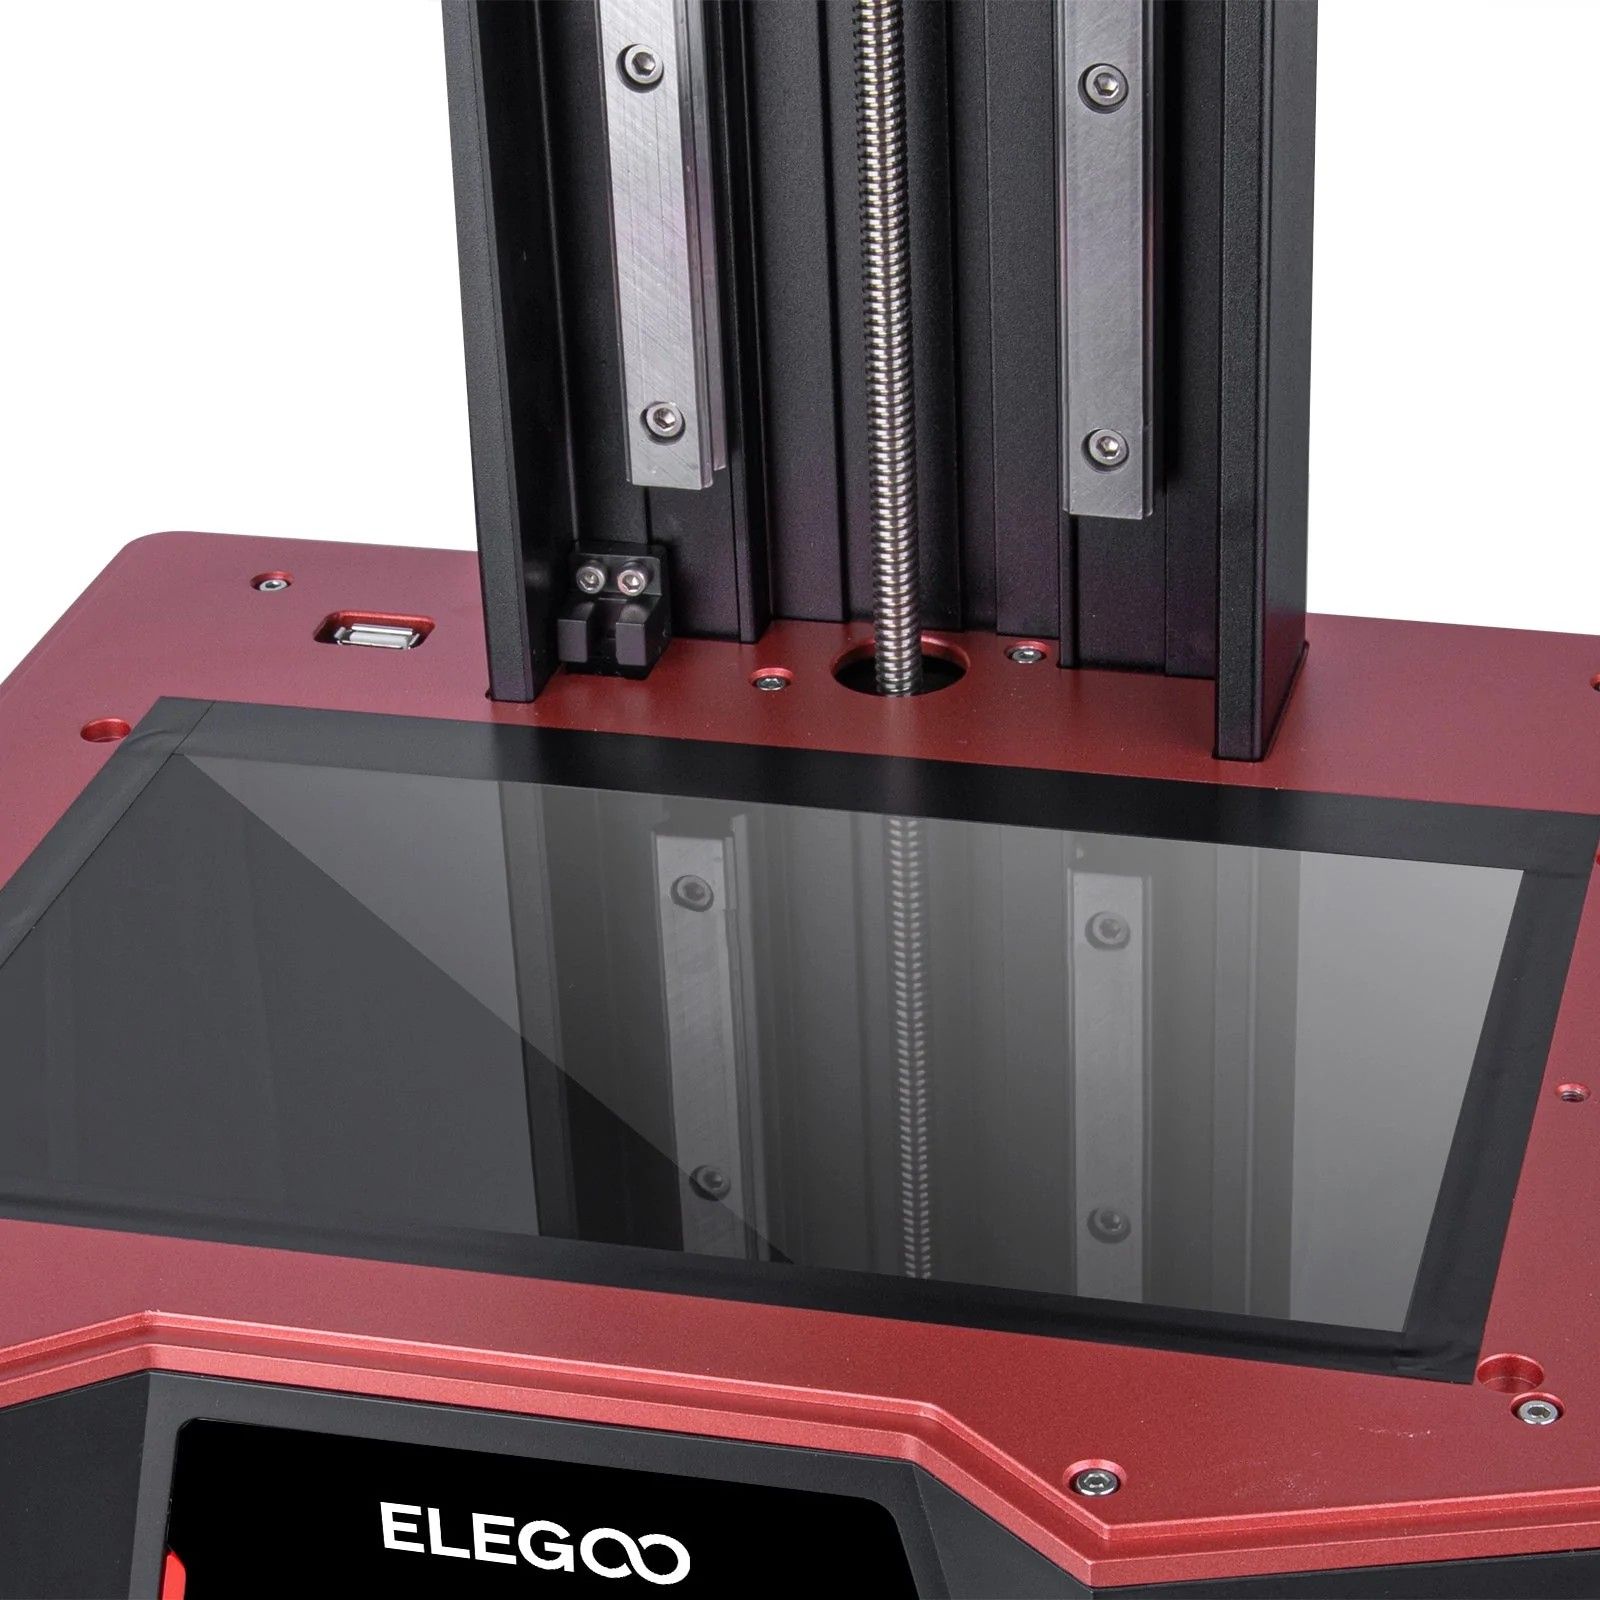 Black ELEGOO Saturn 2 Resin 3D Printer with 10'' 8K Mono LCD, For